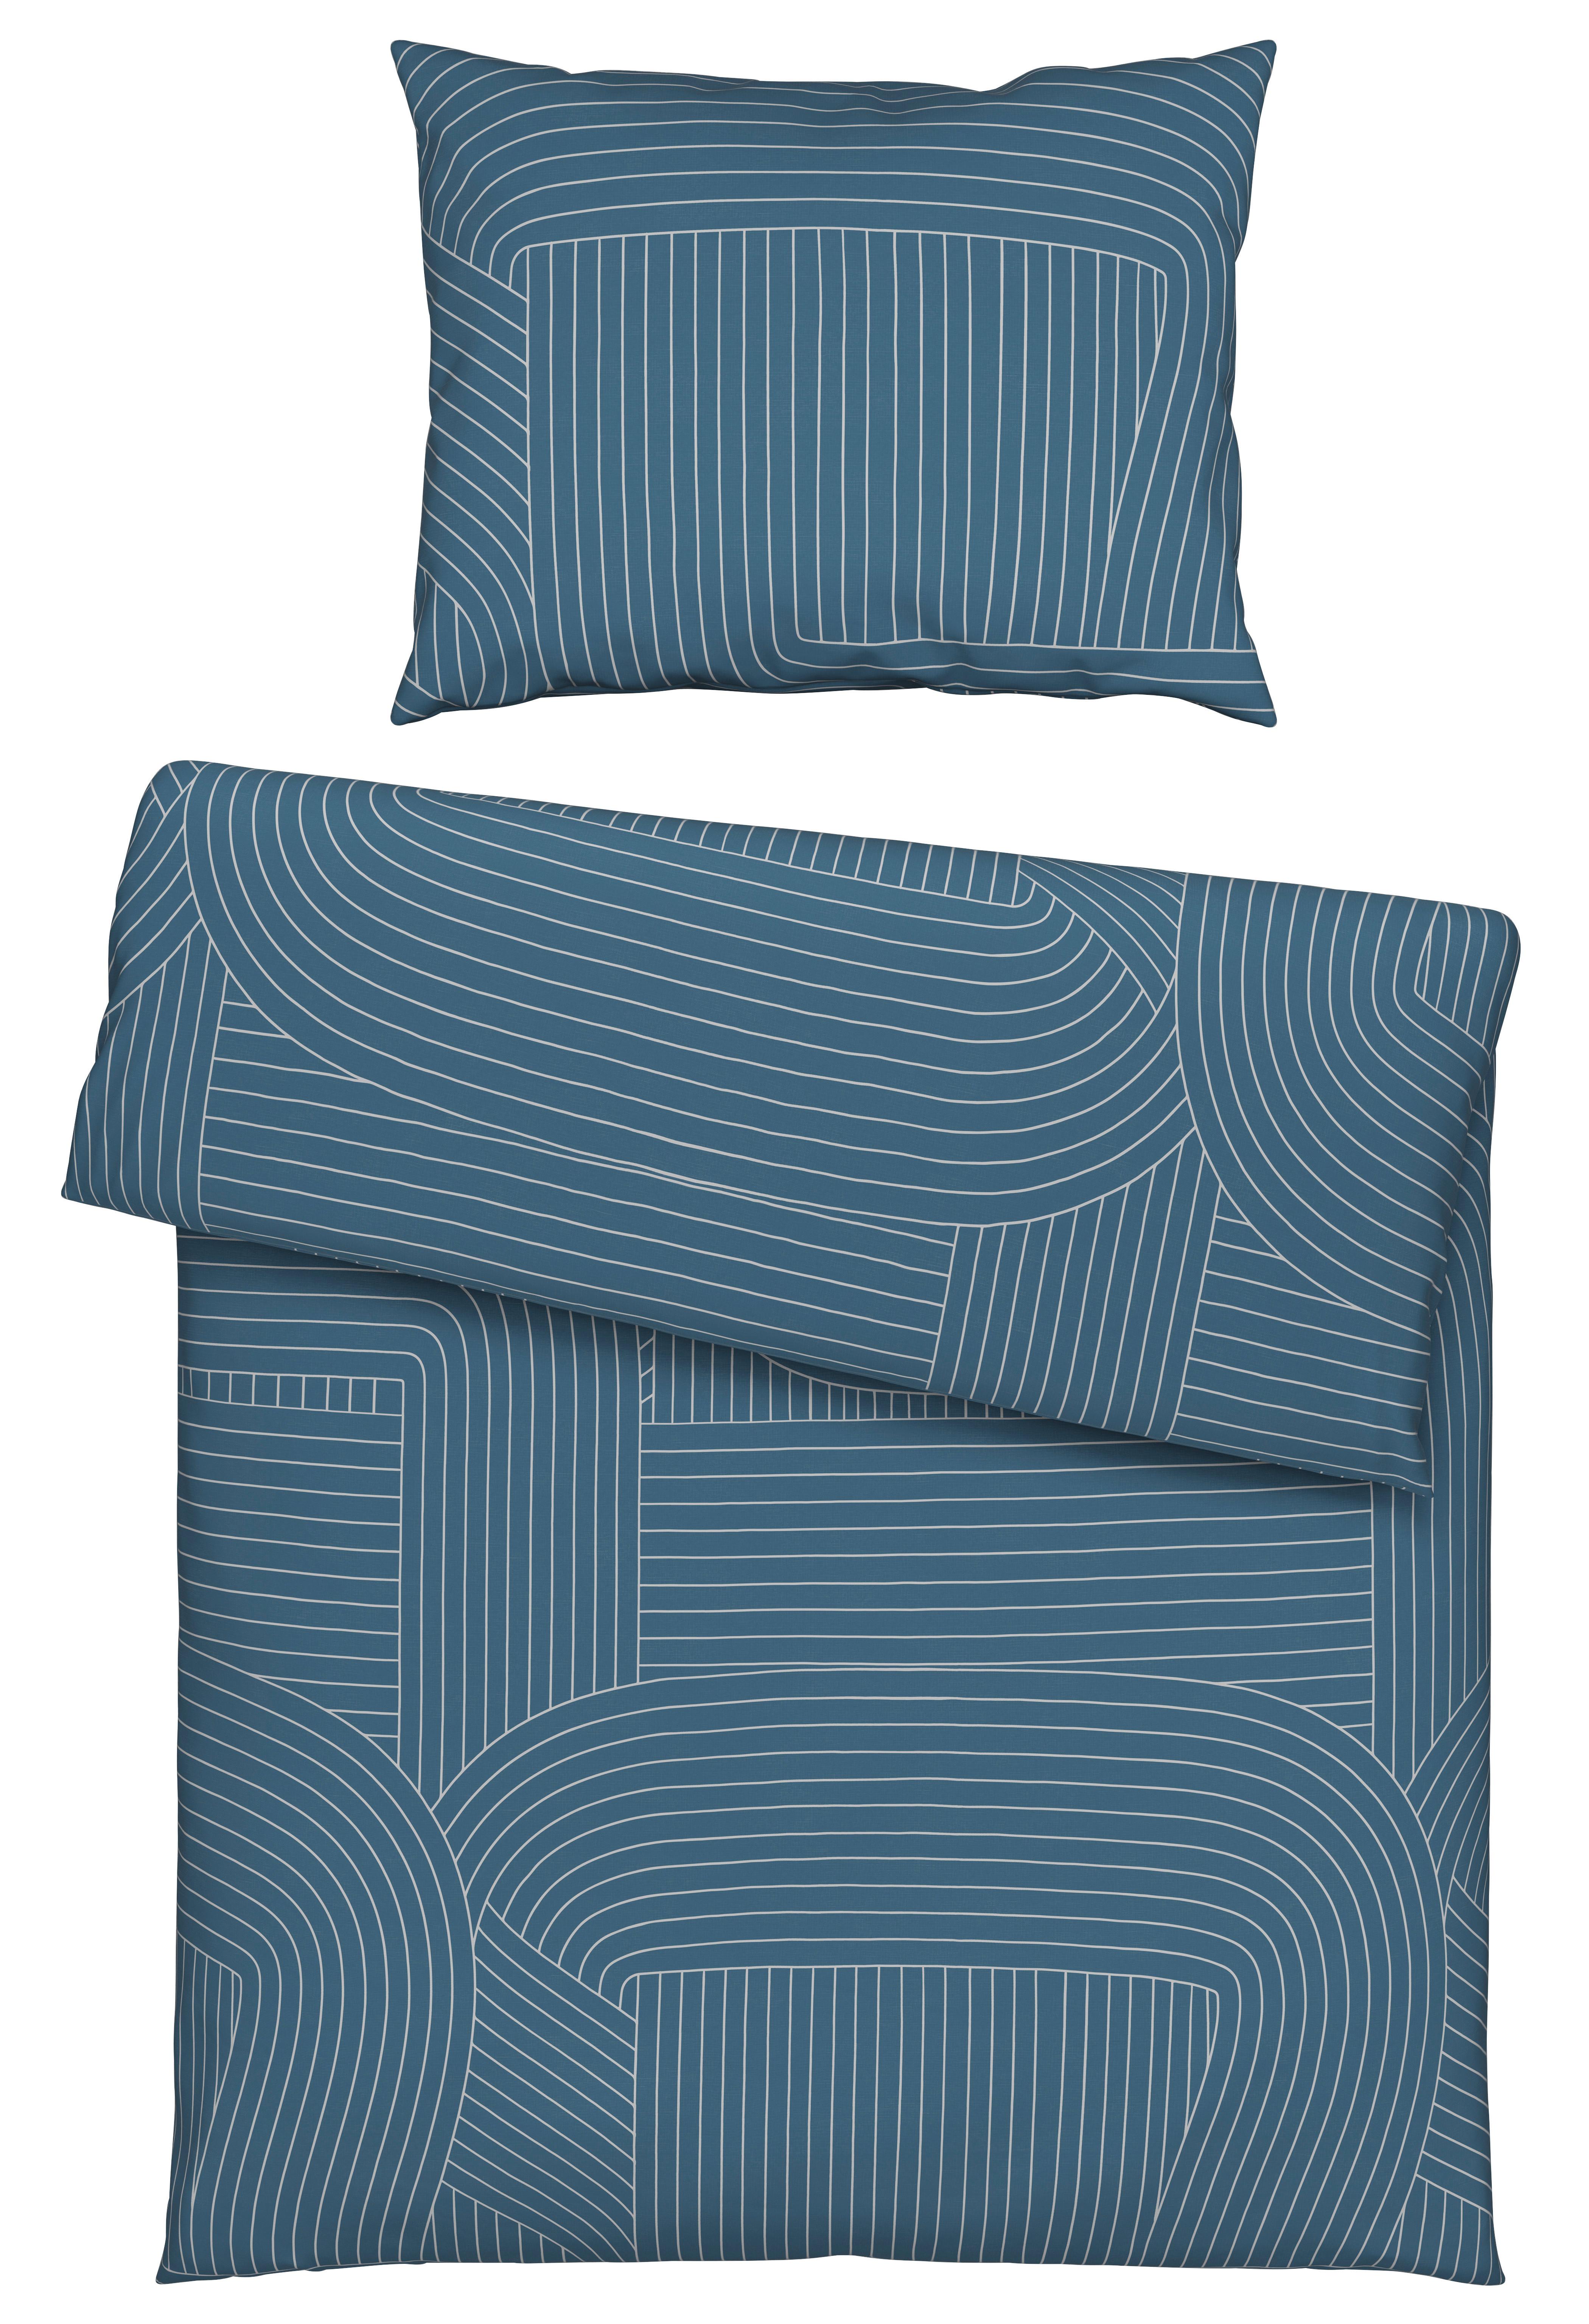 Bettwäsche Scribble ca. 140x200cm - Blau, MODERN, Textil (140/200cm) - Modern Living